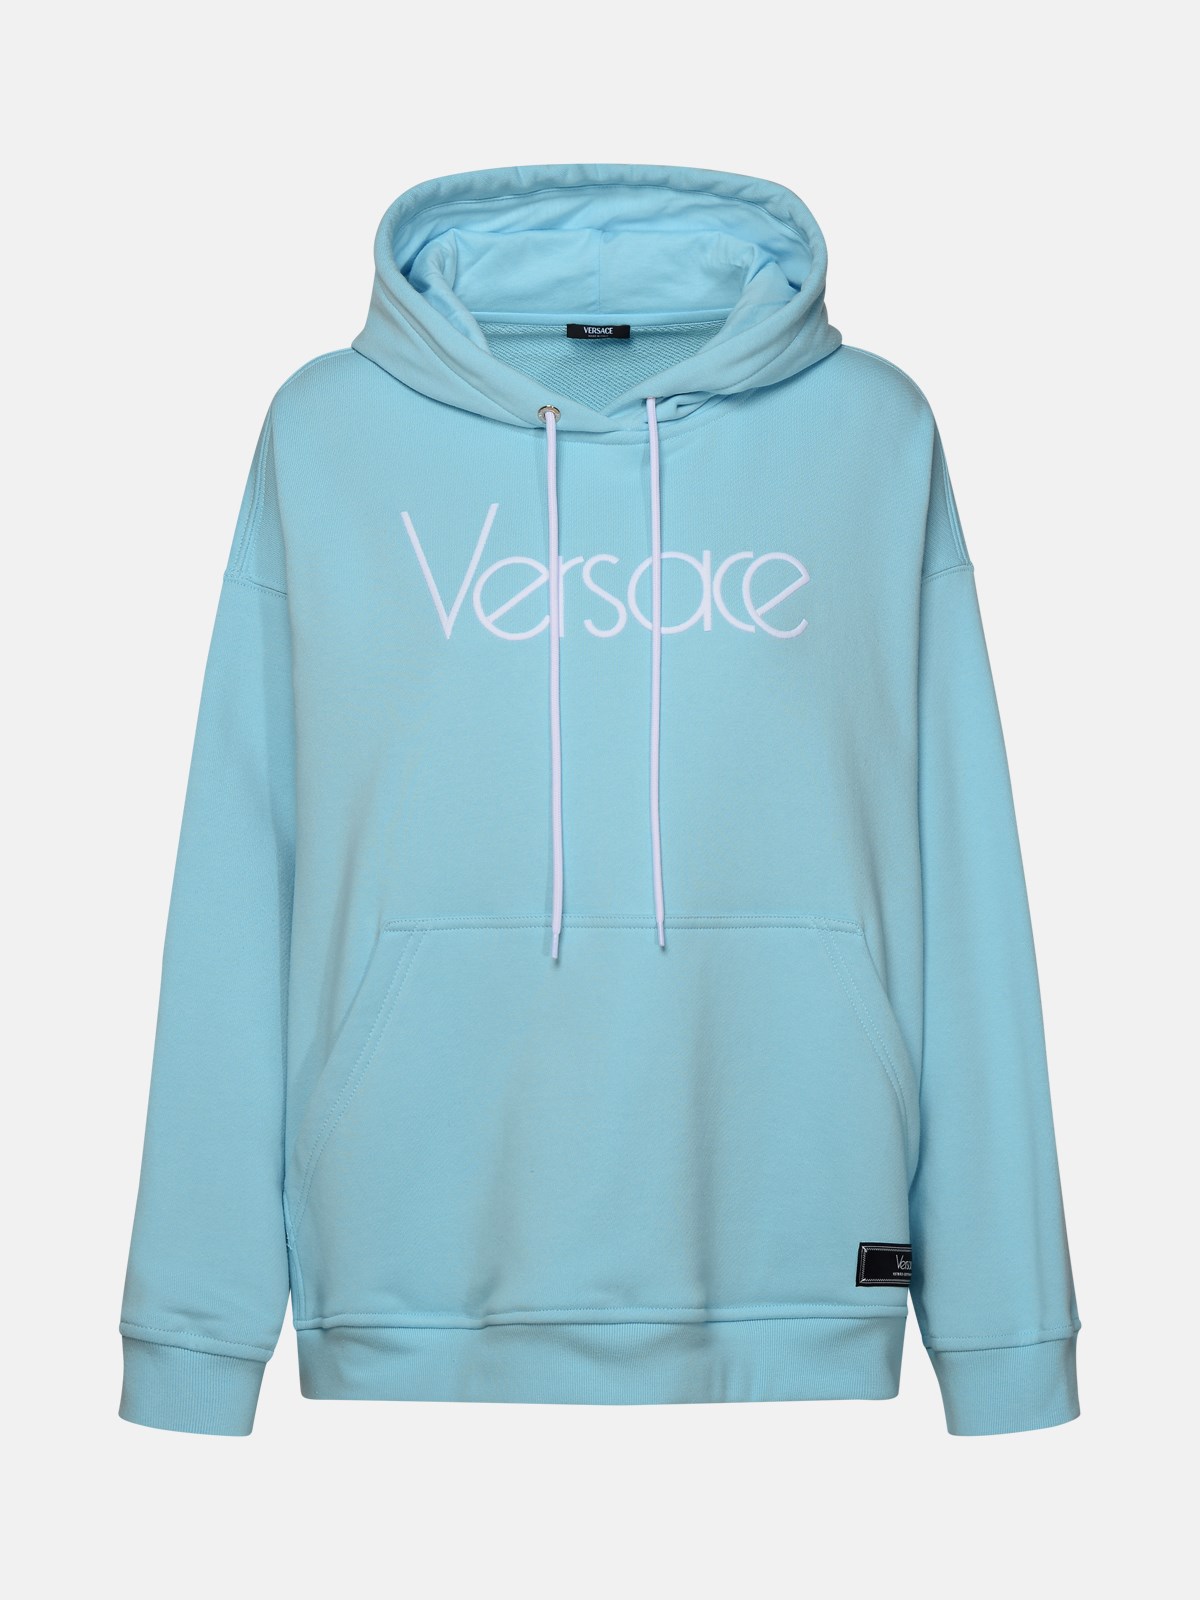 Versace Kids' Light Blue Cotton Sweatshirt